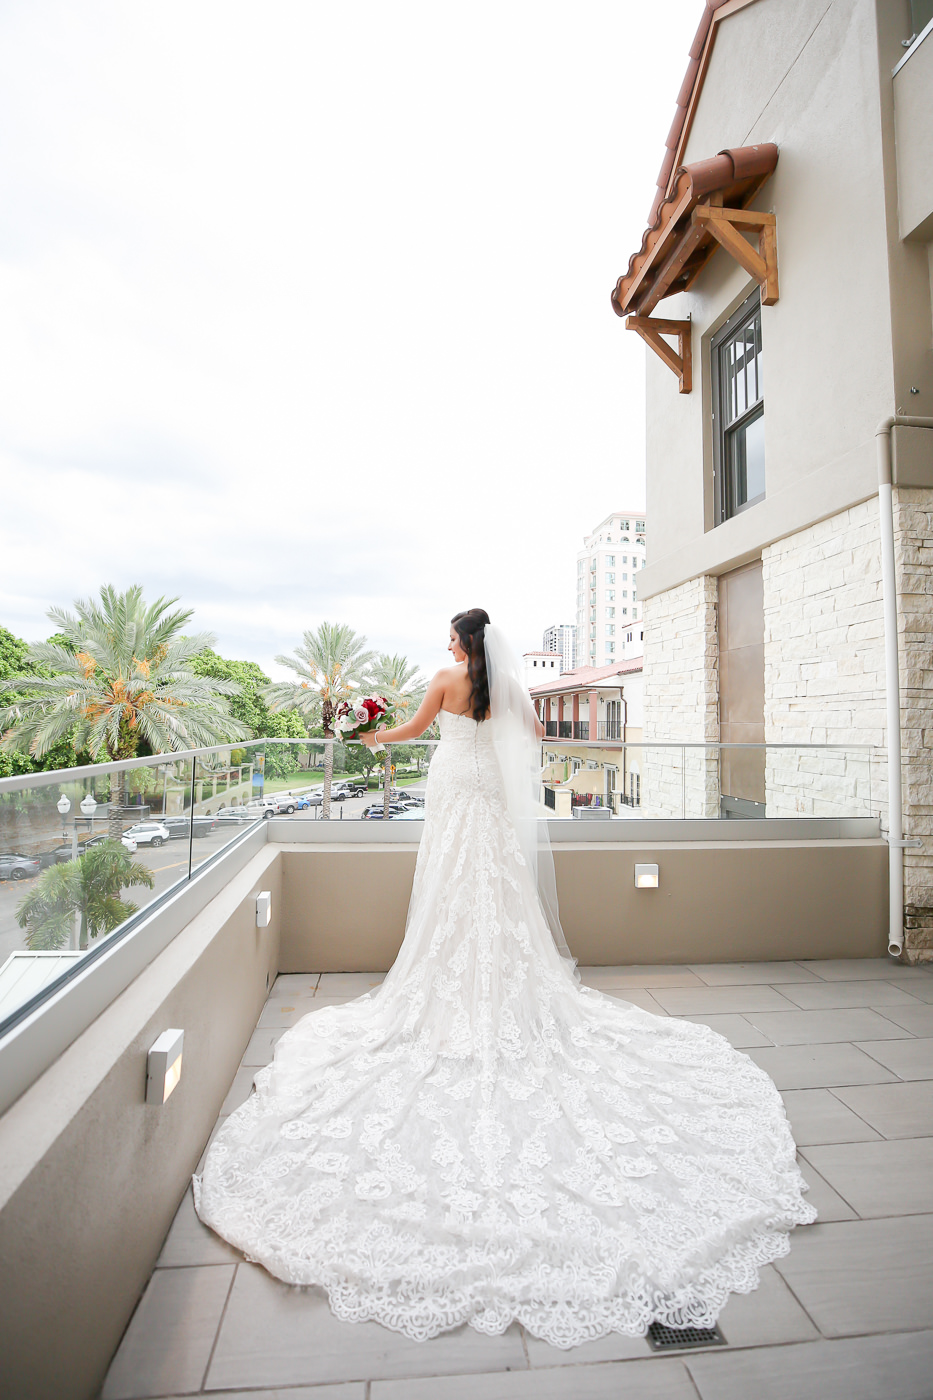 Romantic Bride in Lace Essense of Australia Wedding Dress Hotel Balcony Portrait | Wedding Photographer Lifelong Photography Studios